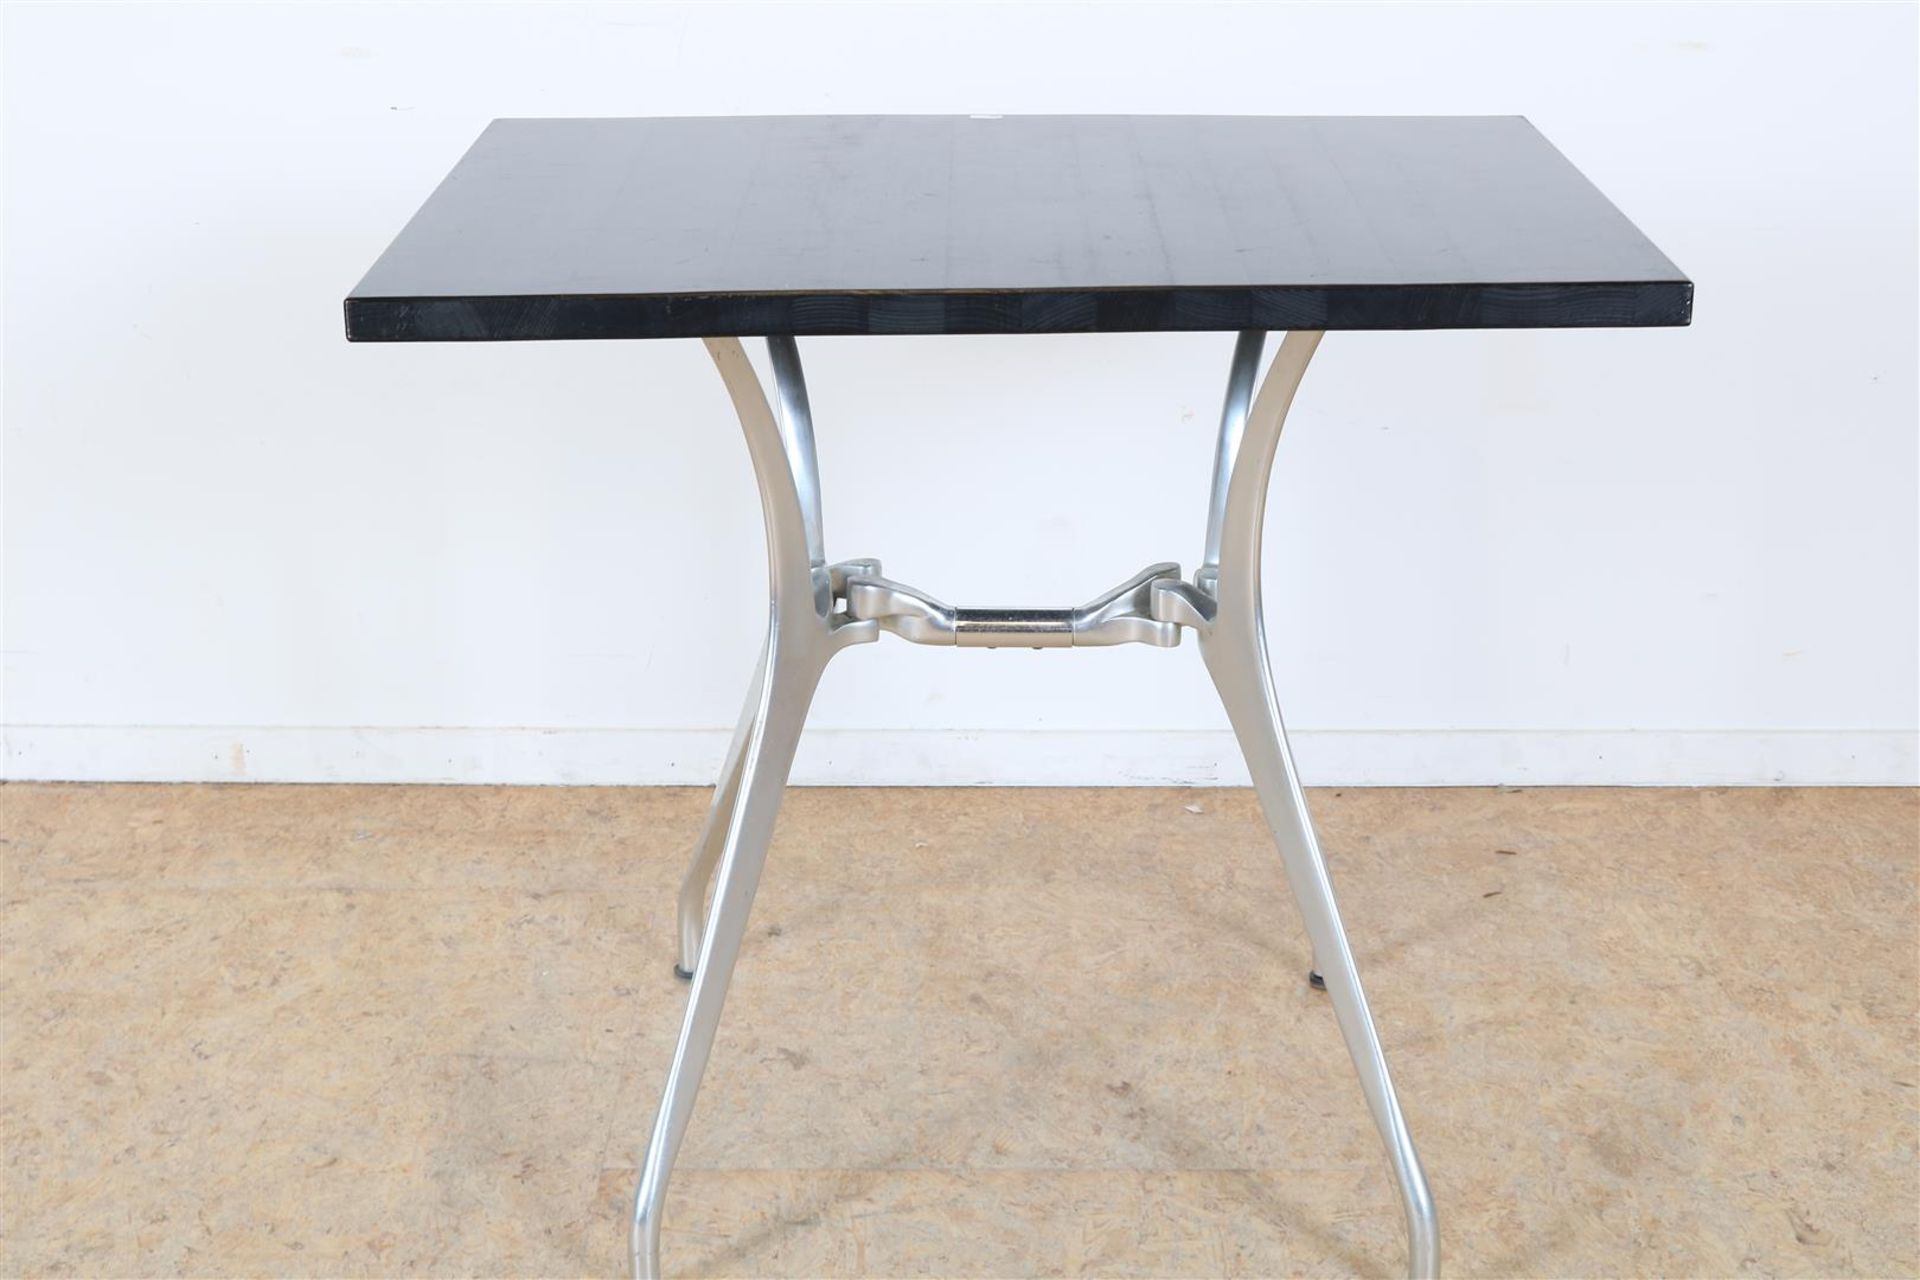 Satellite Breda bistro tables on aluminum base, h. 73, bro. 80, d. 60 cm.